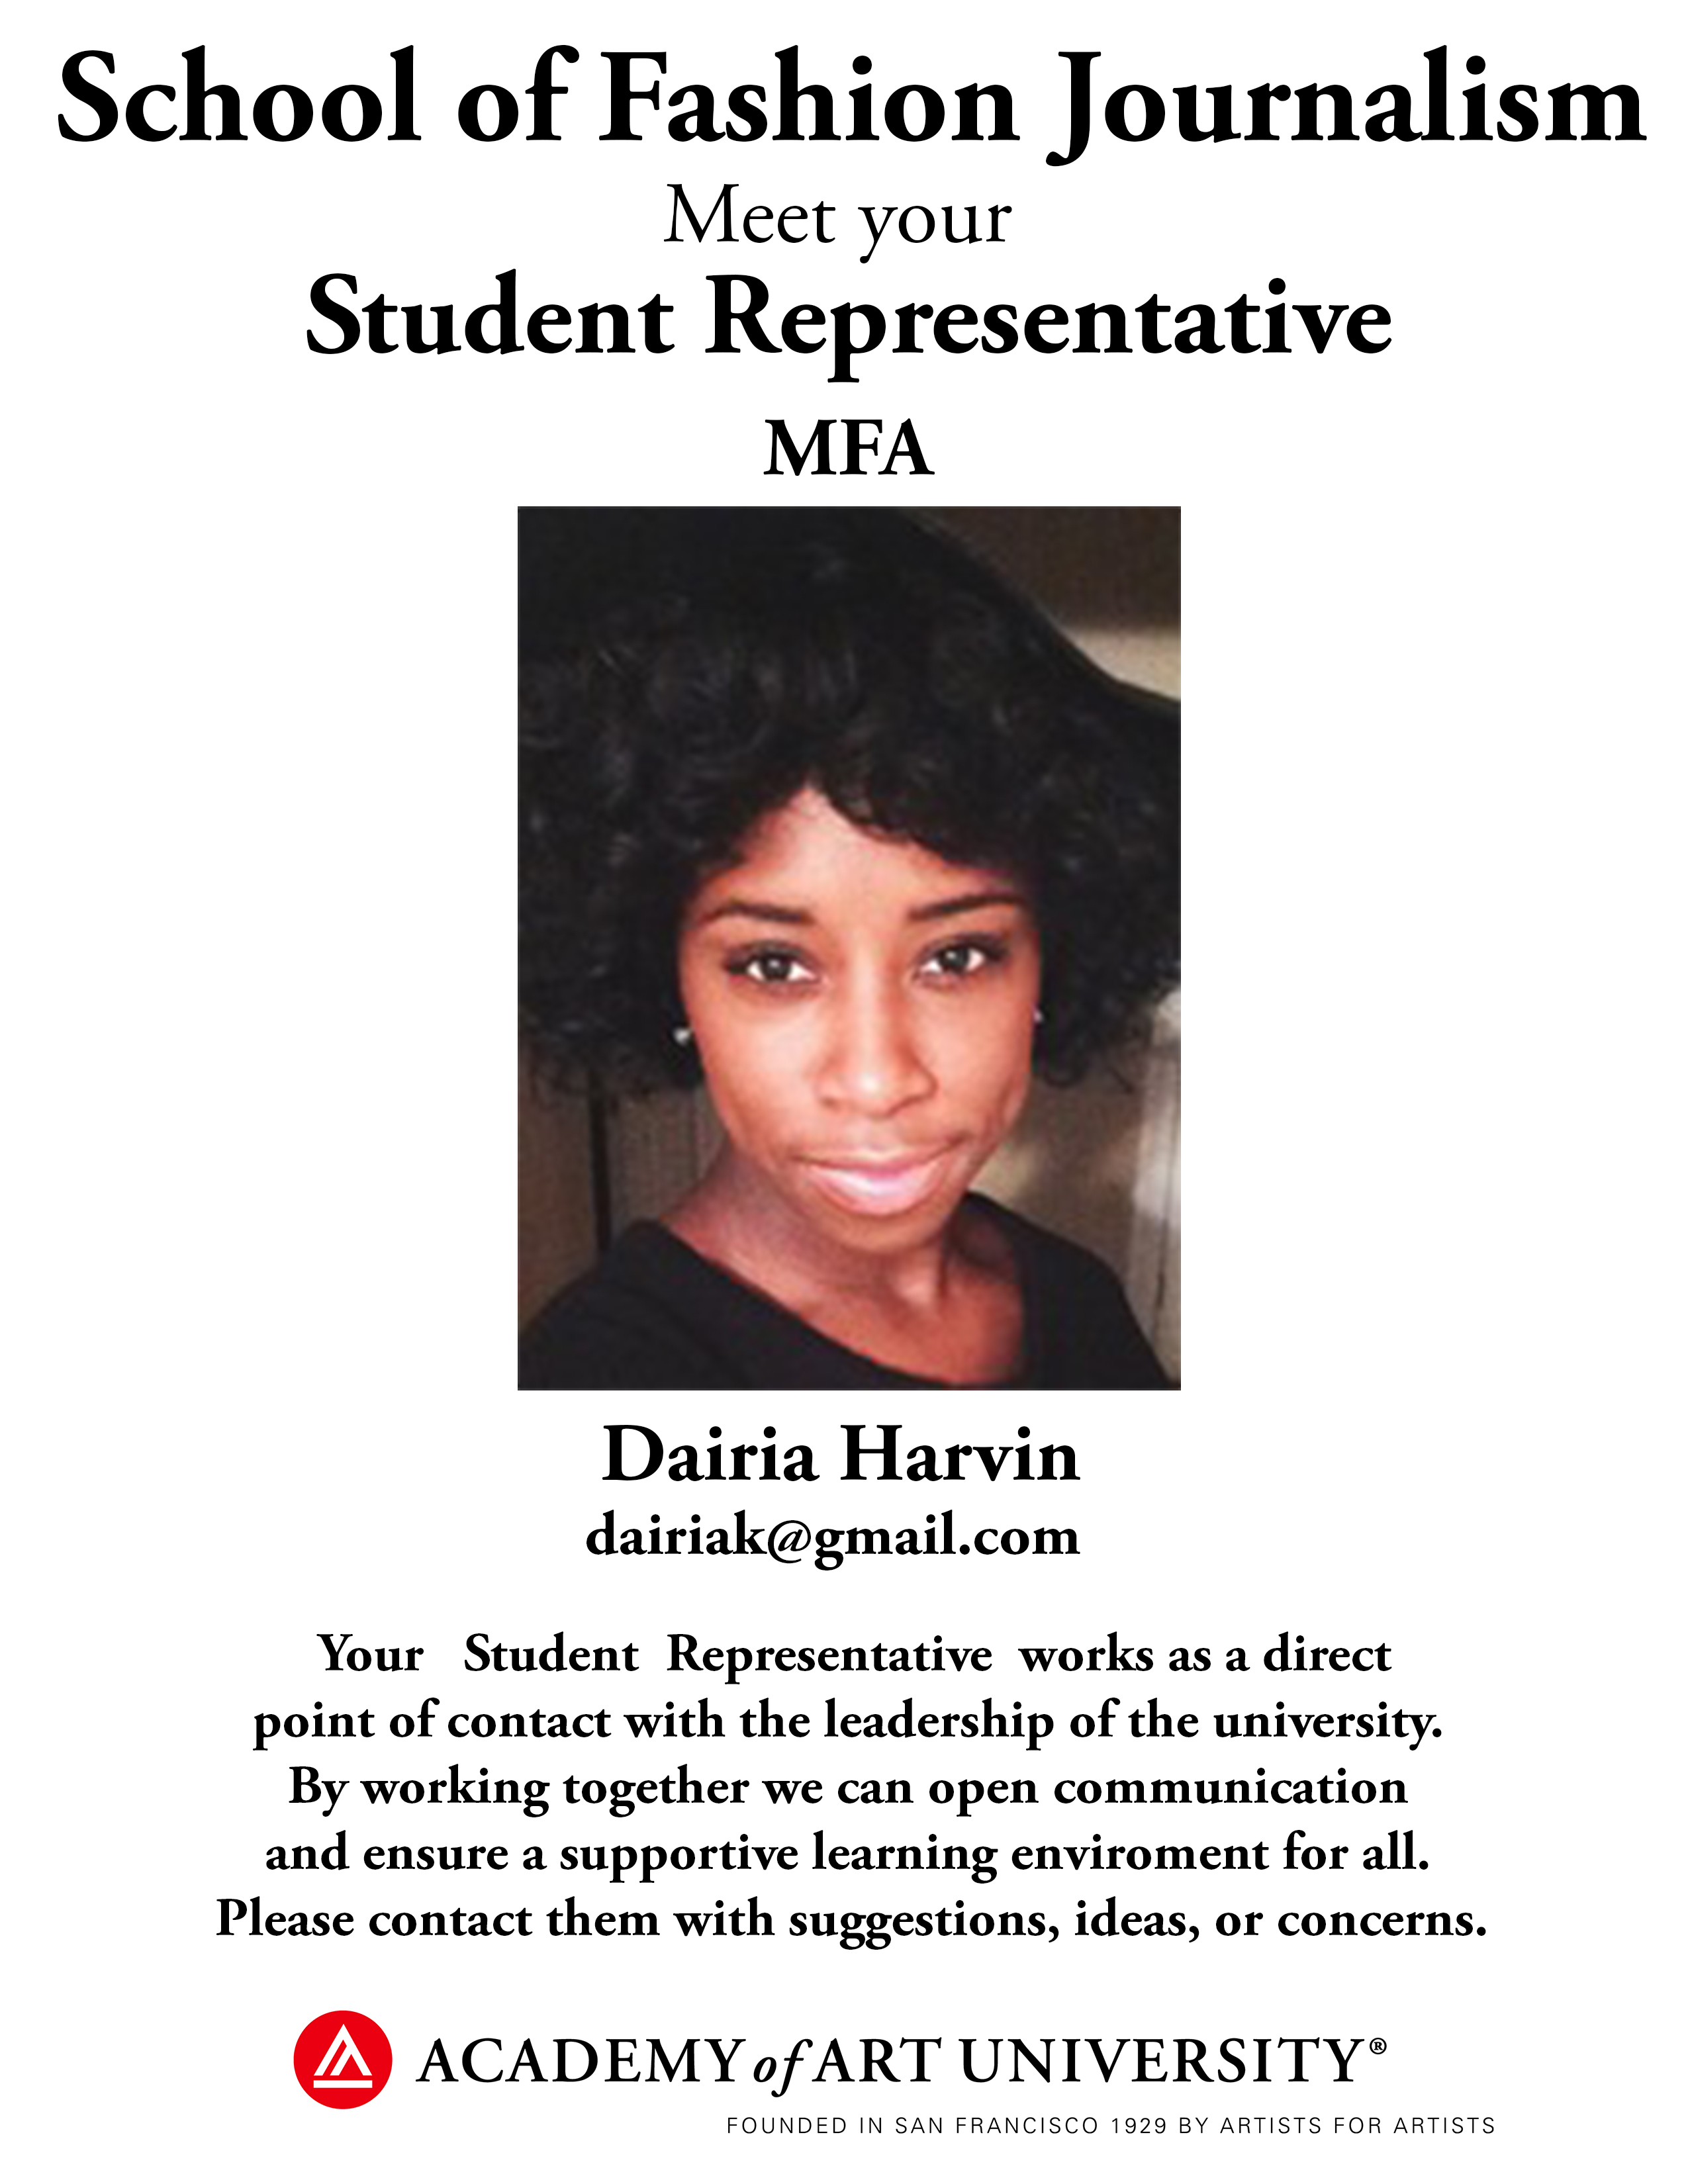 MFA Fashion Journalism student representative Dairia Harvin/email: dairiak@gmail.com